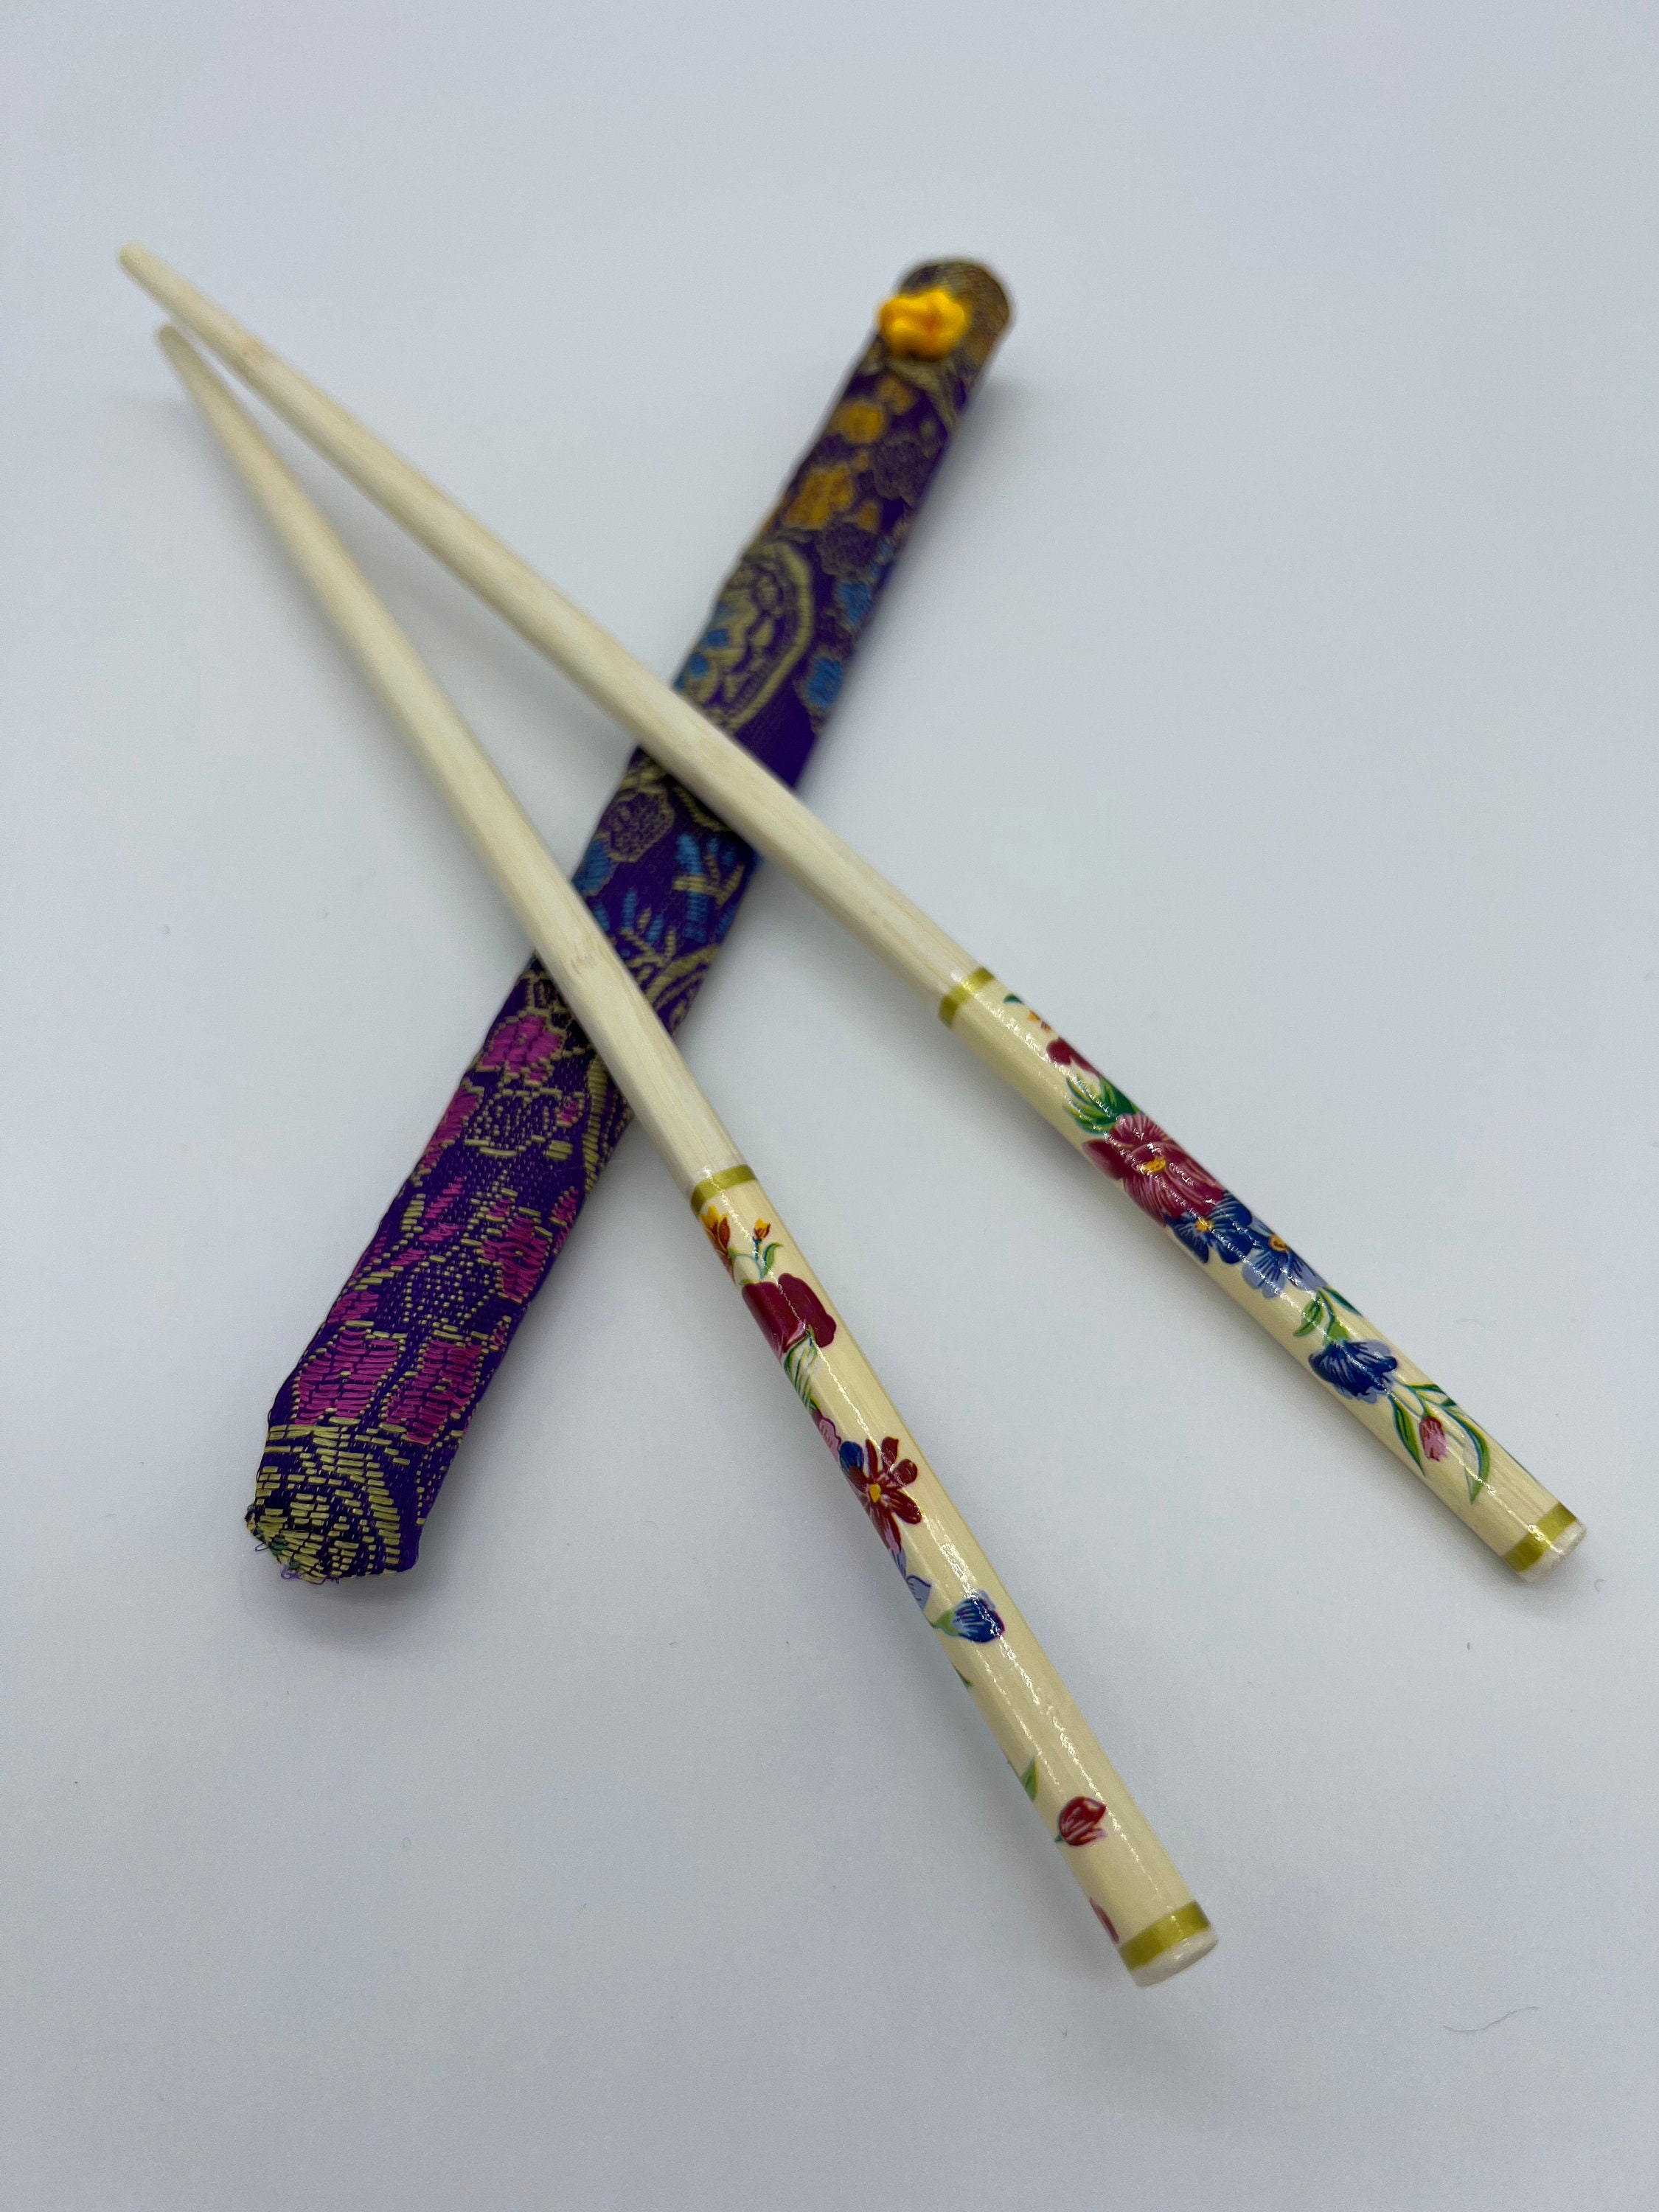 Chinese Gold Dragon Style Chopsticks Luxury Alloy Sushi Chopsticks  Household Chop Sticks Tableware 1 Pair